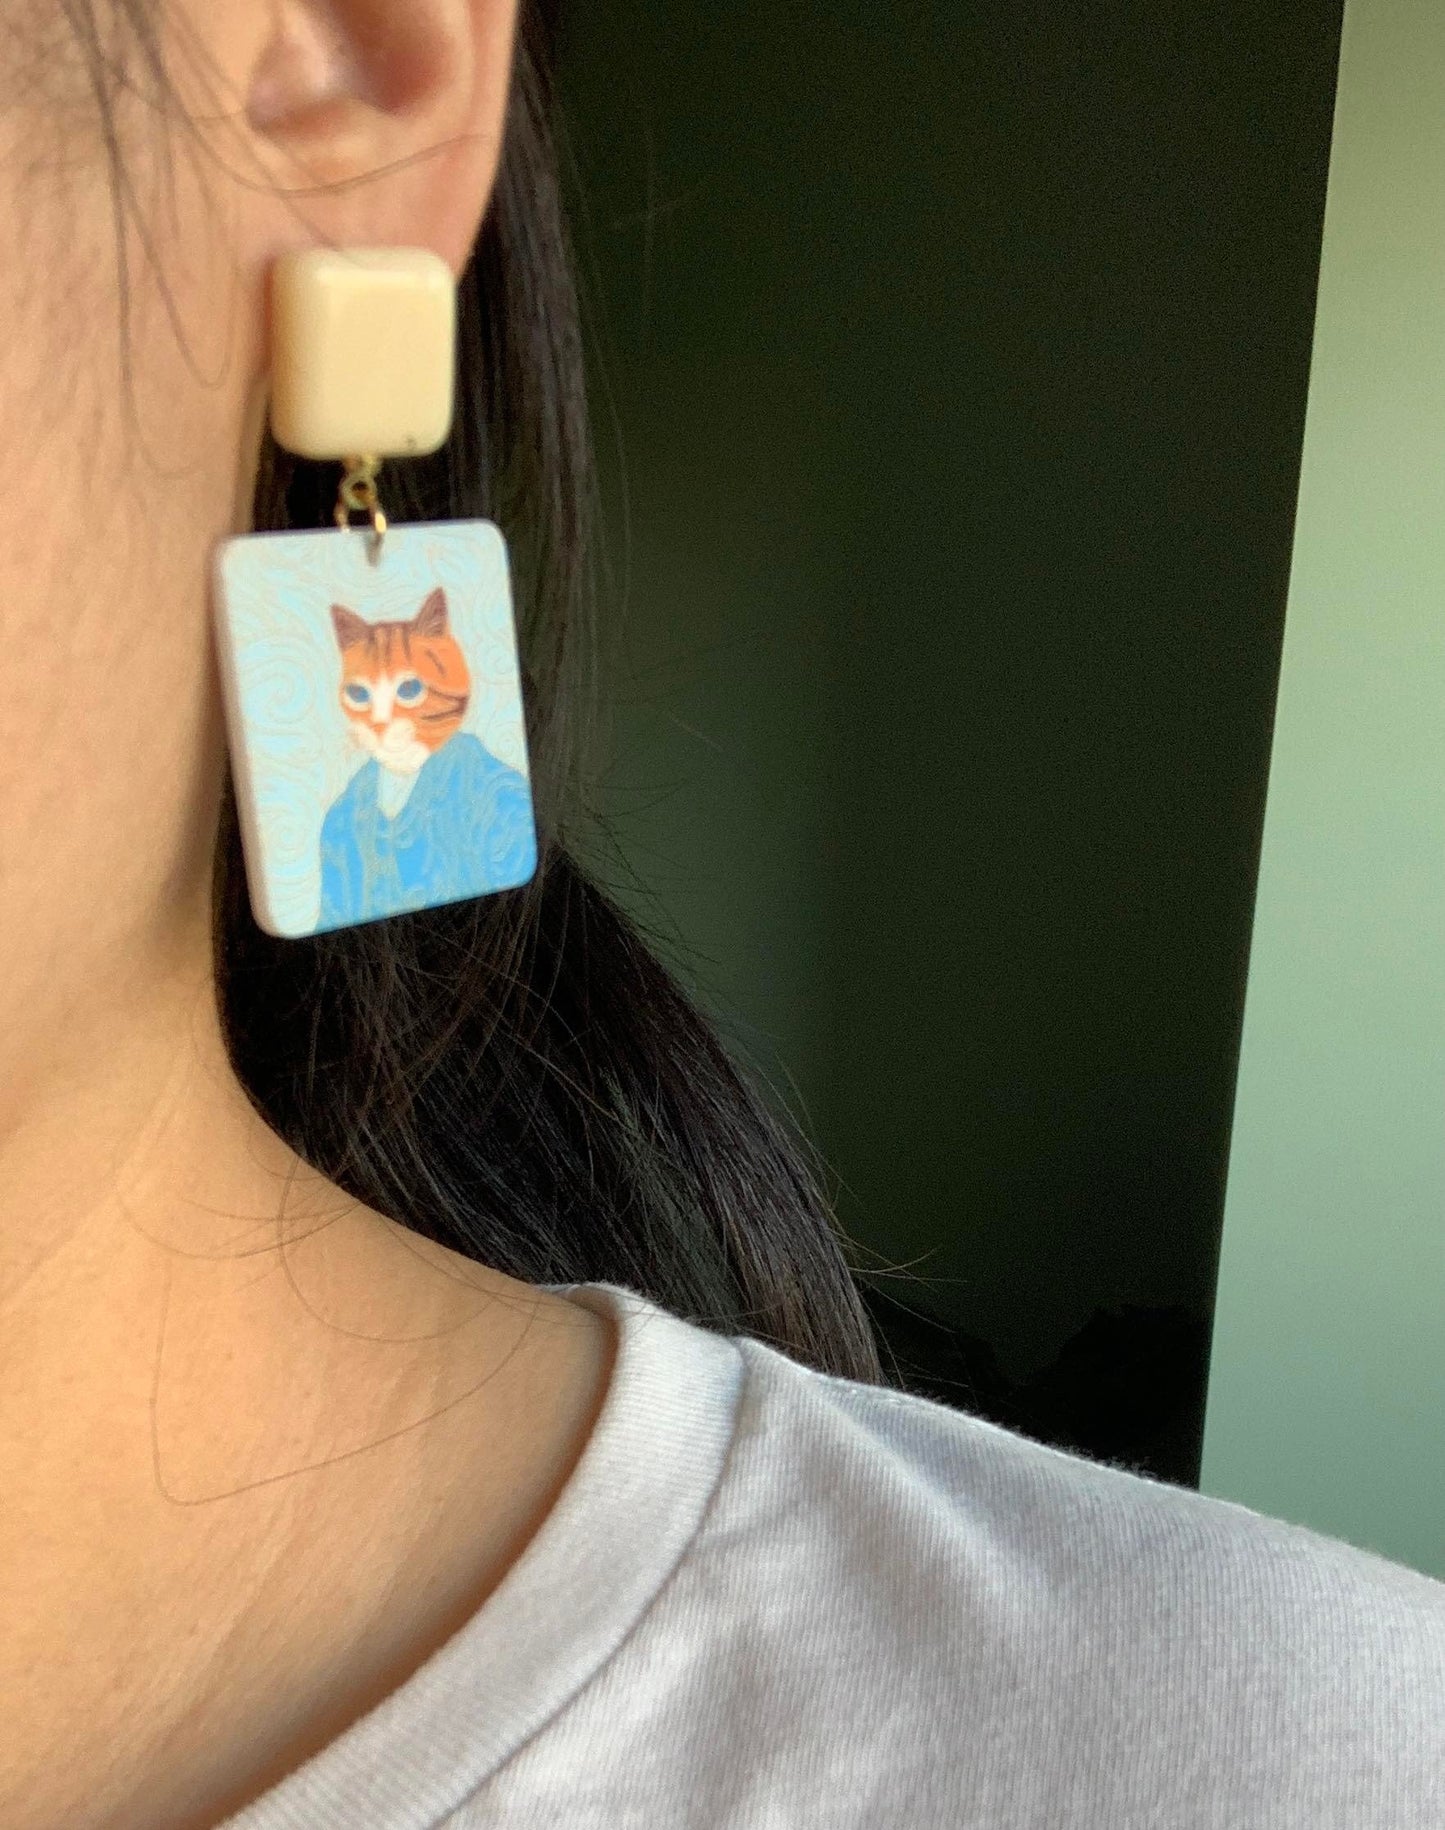 Acrylic Van Meow Cat Earrings